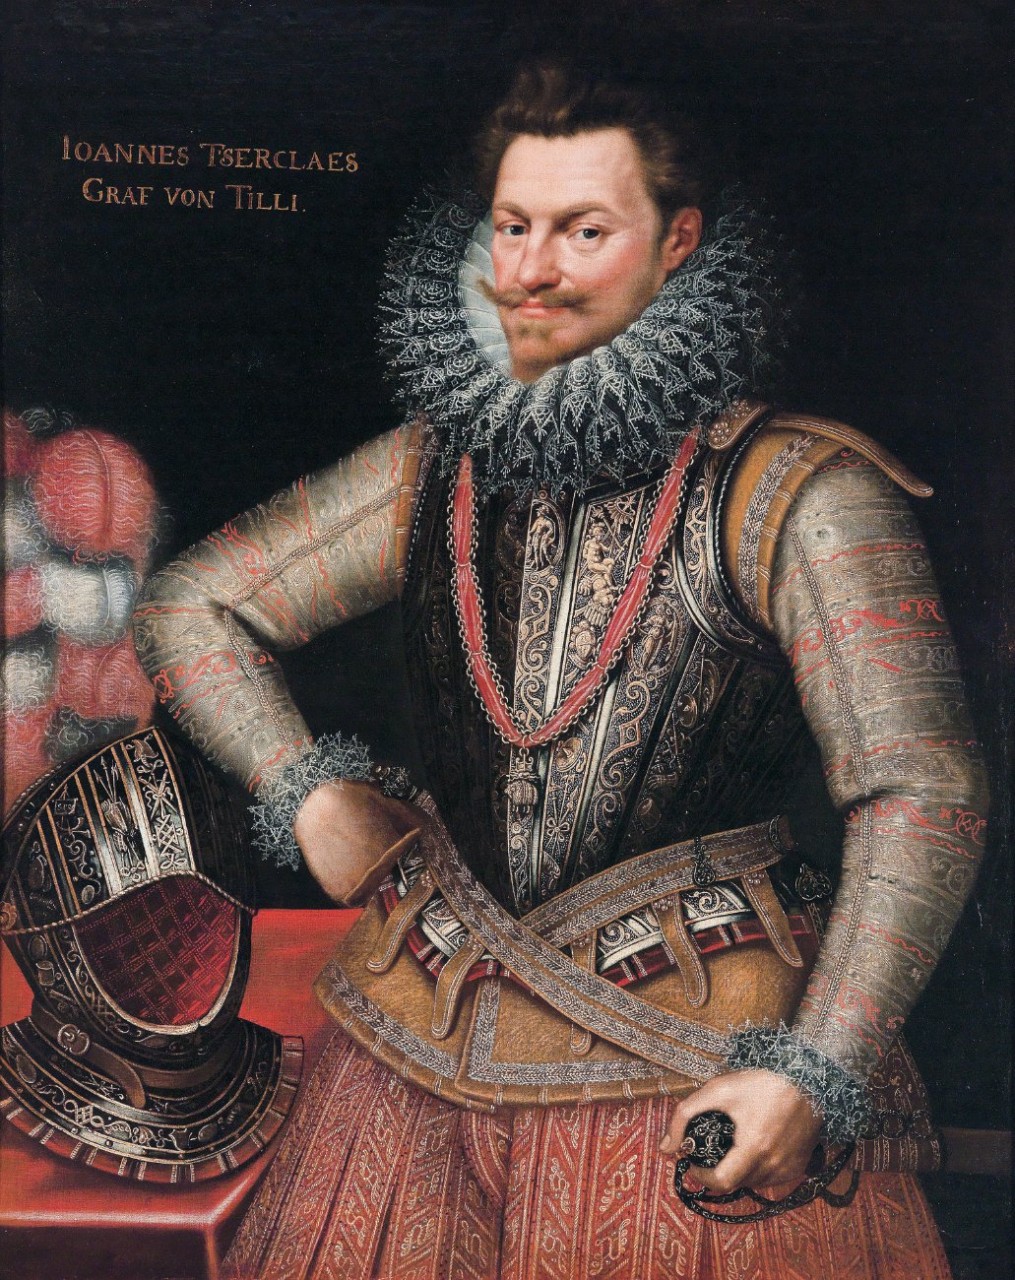 Франс Пурбус Младший (Frans Pourbus the Younger, 1569-1622, Netherlandish) - мастер портрета эпохи барокко